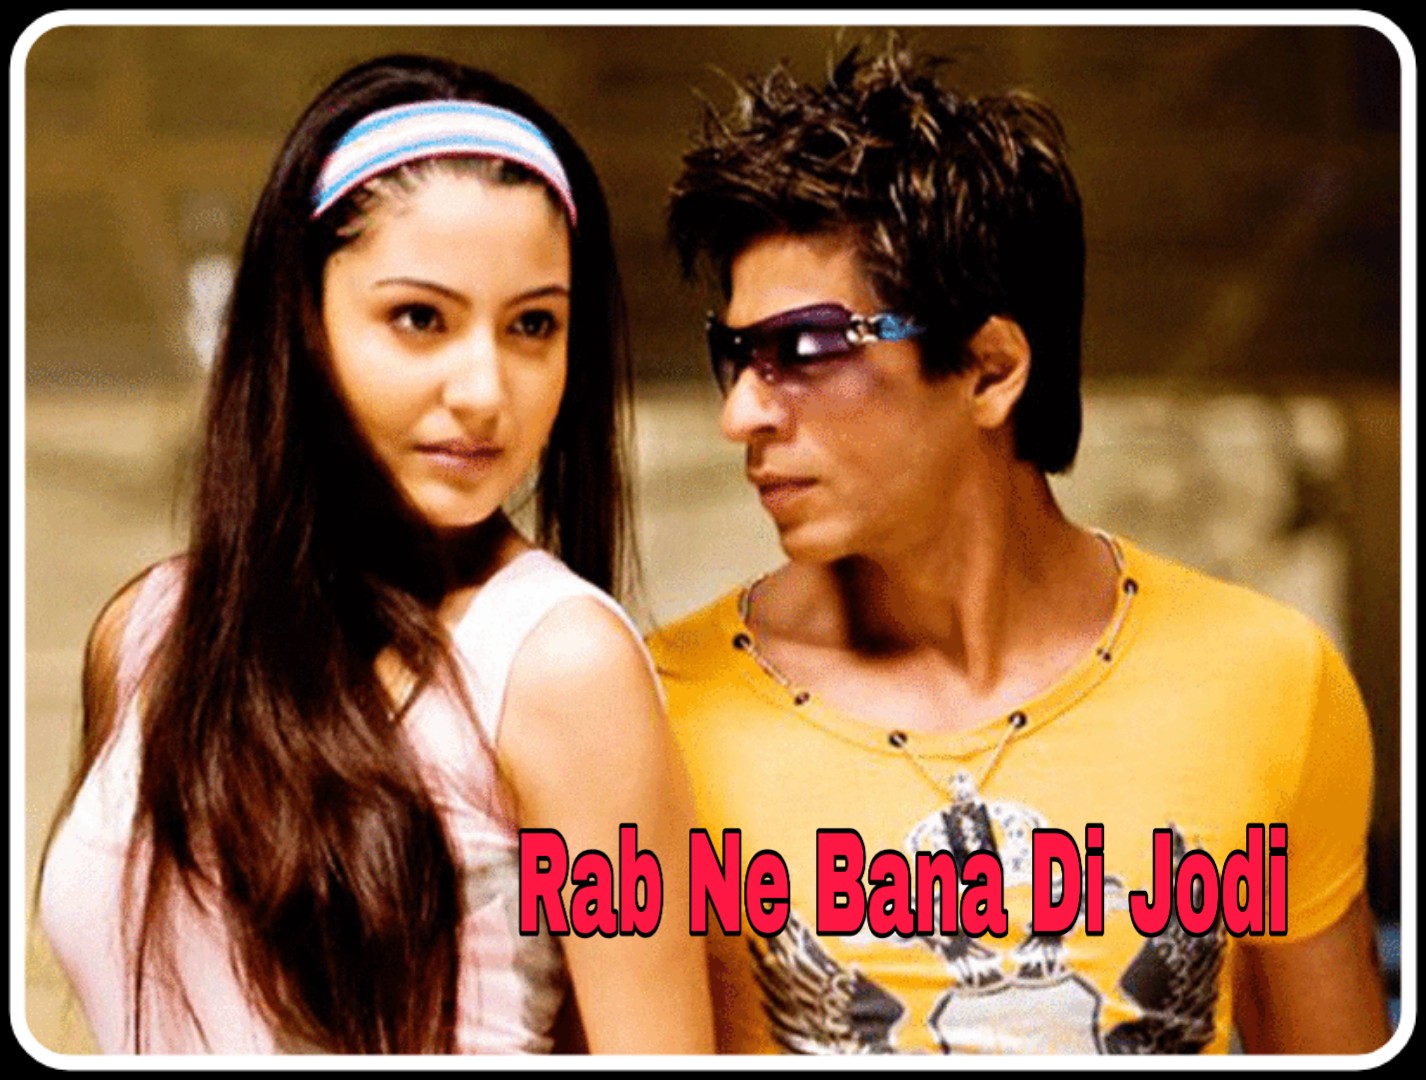 Rab Ne Banadi Jodi Movie Download